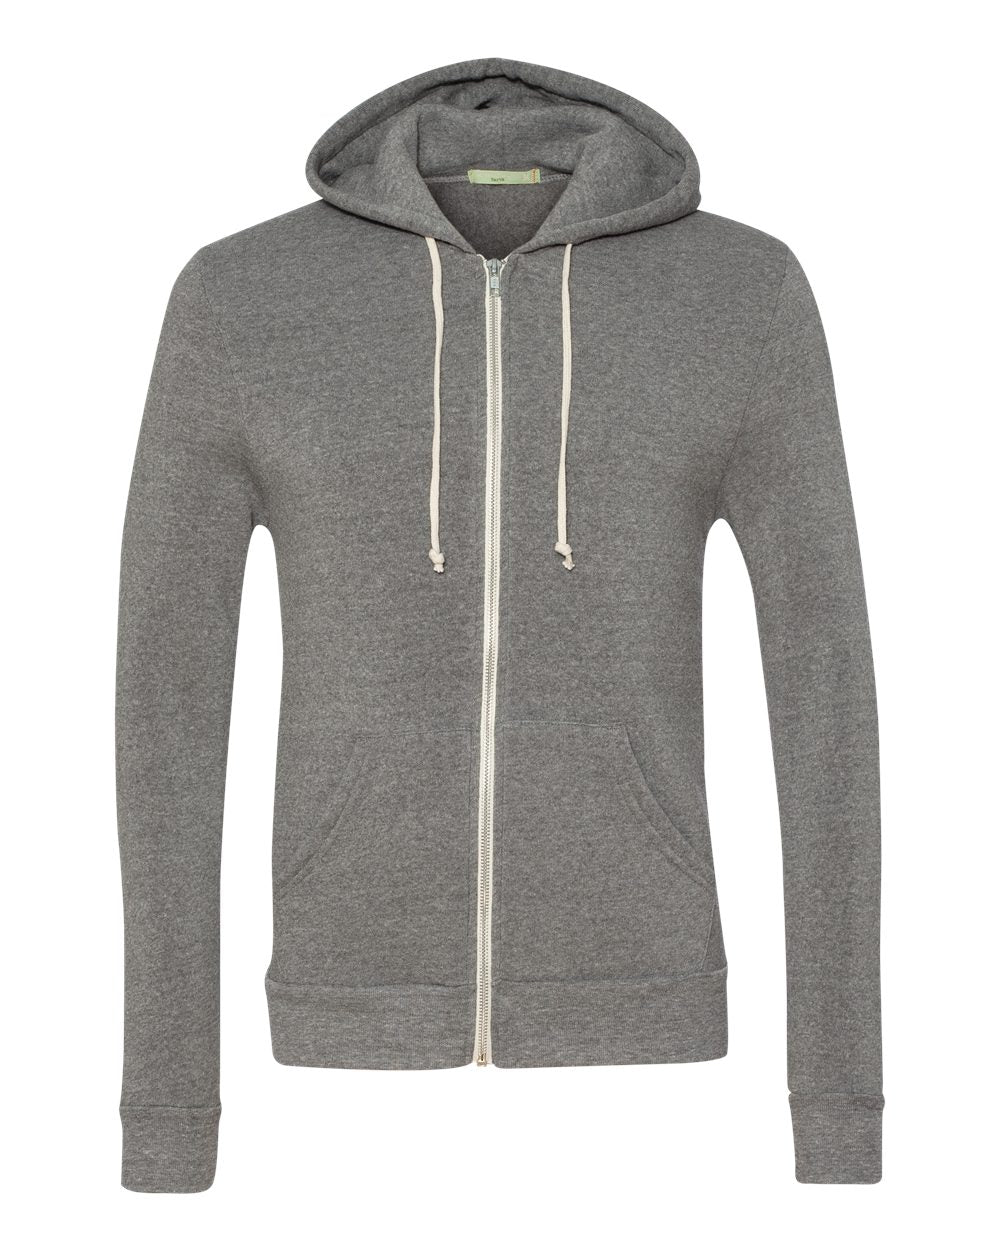 Alternative Rocky Eco-Fleece Full-Zip Hooded Sweatshirt 9590 #color_Eco Grey